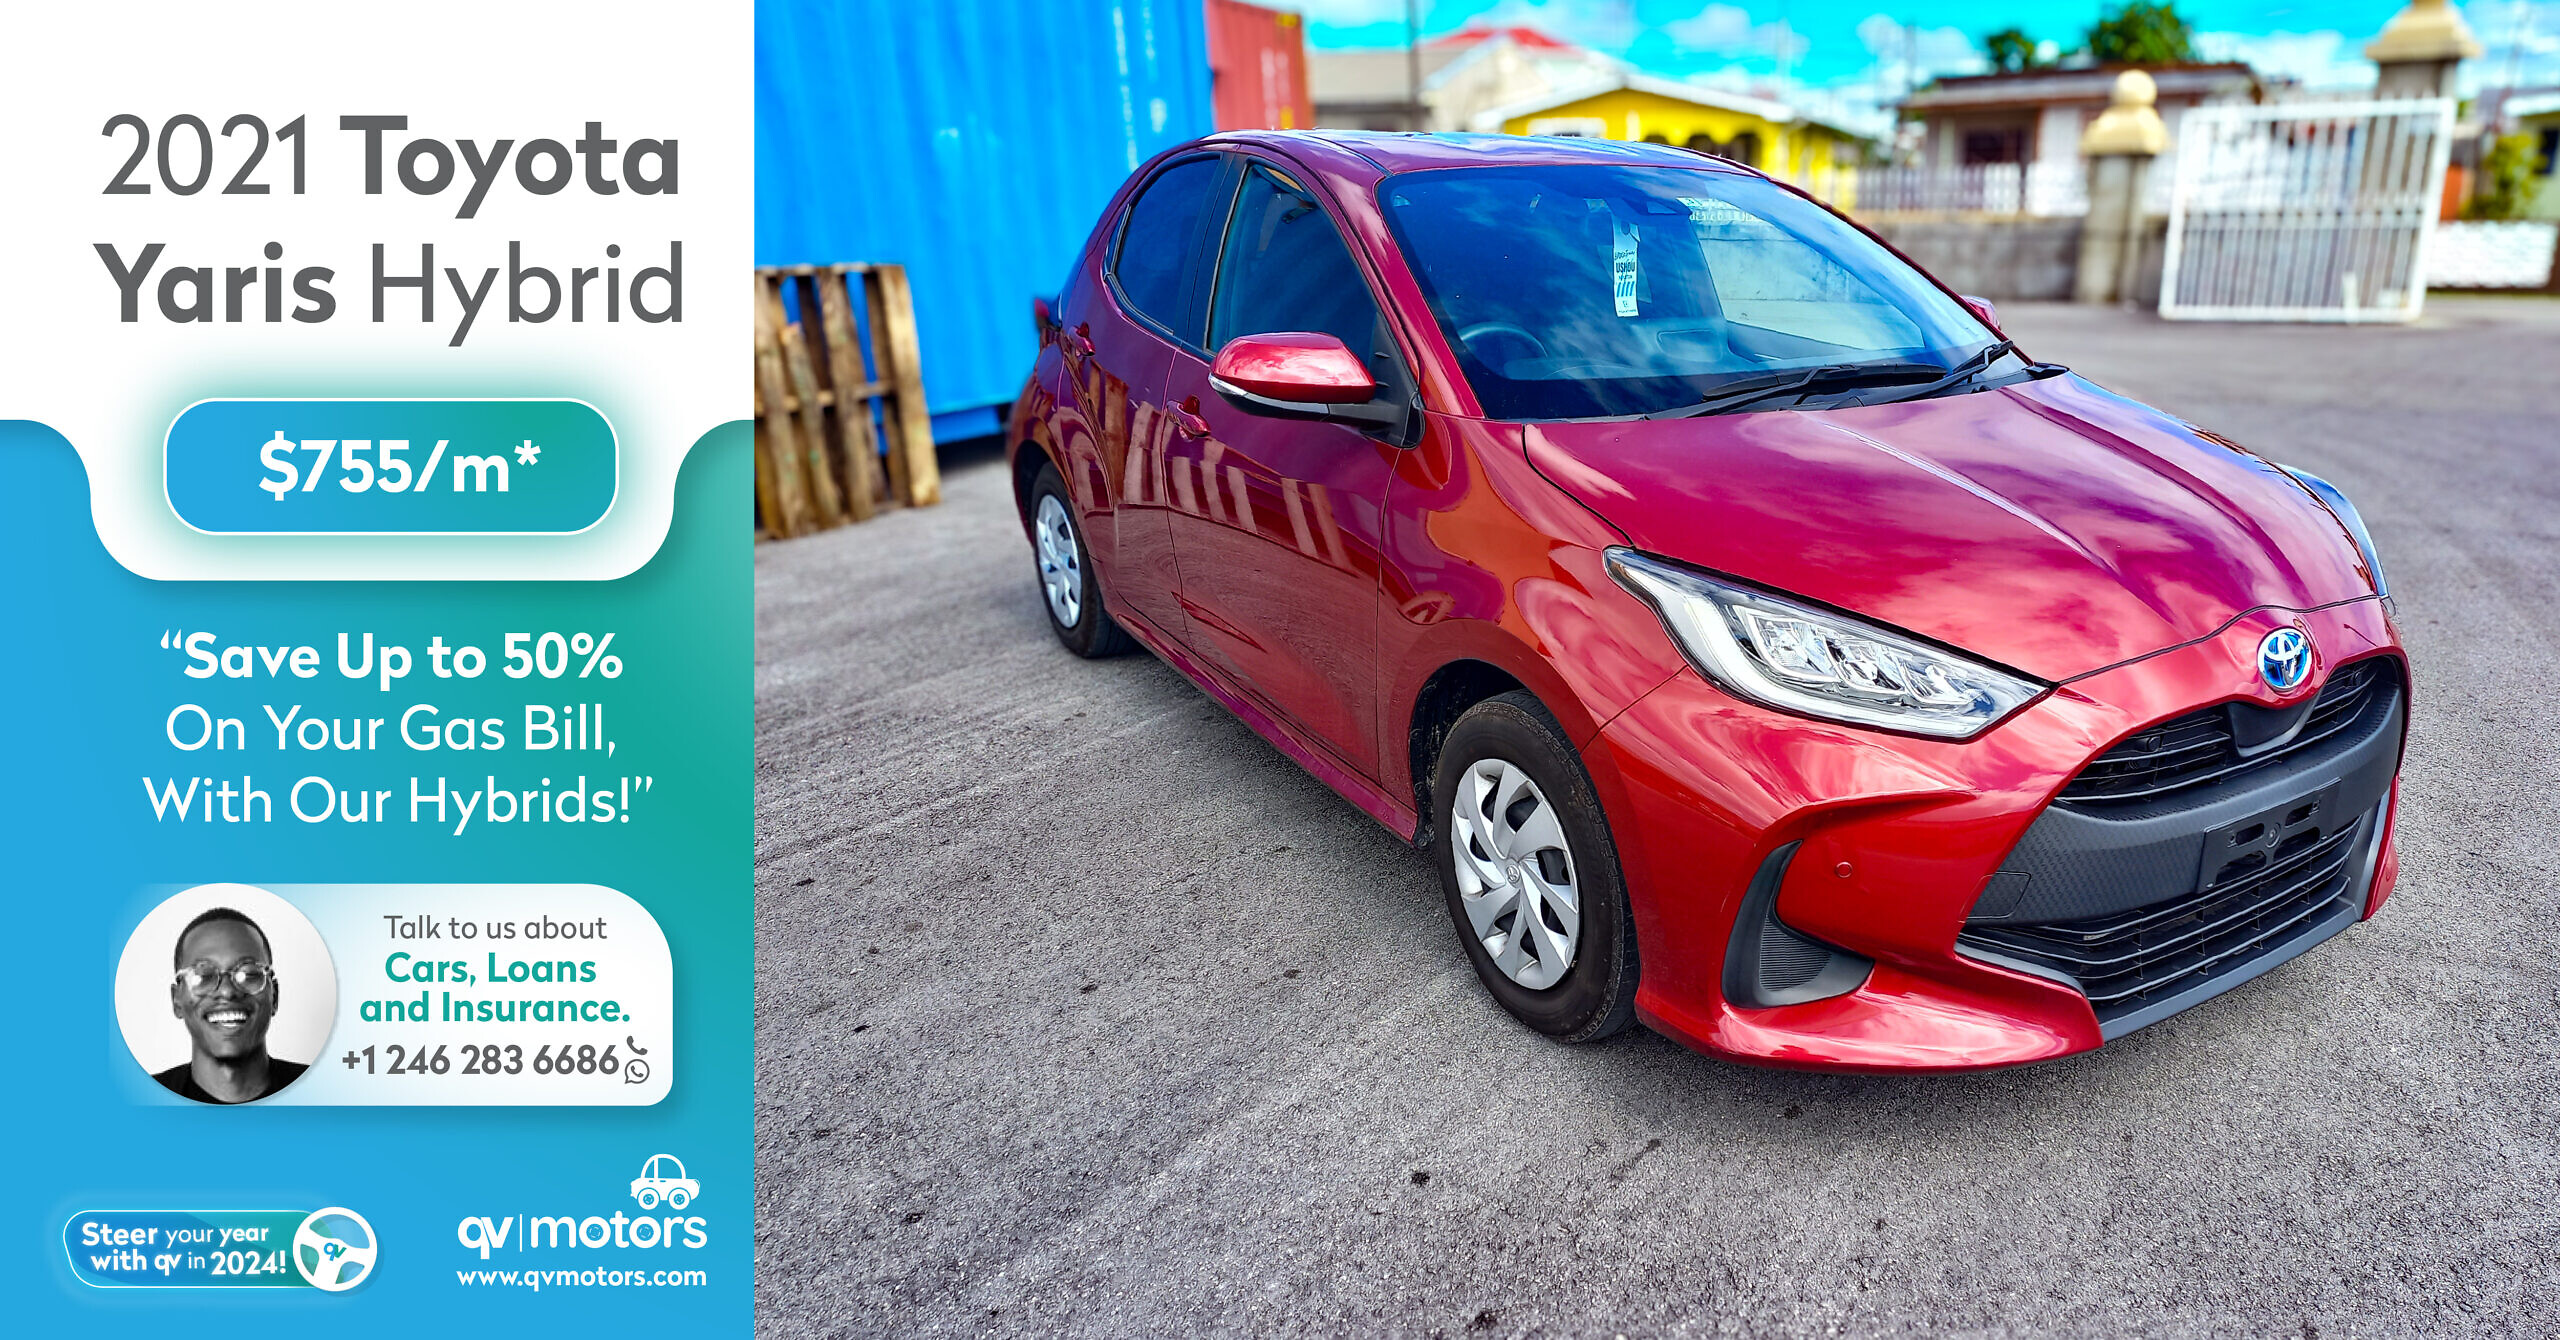 2021 Toyota Yaris Hybrid – Save 50% on Gas!